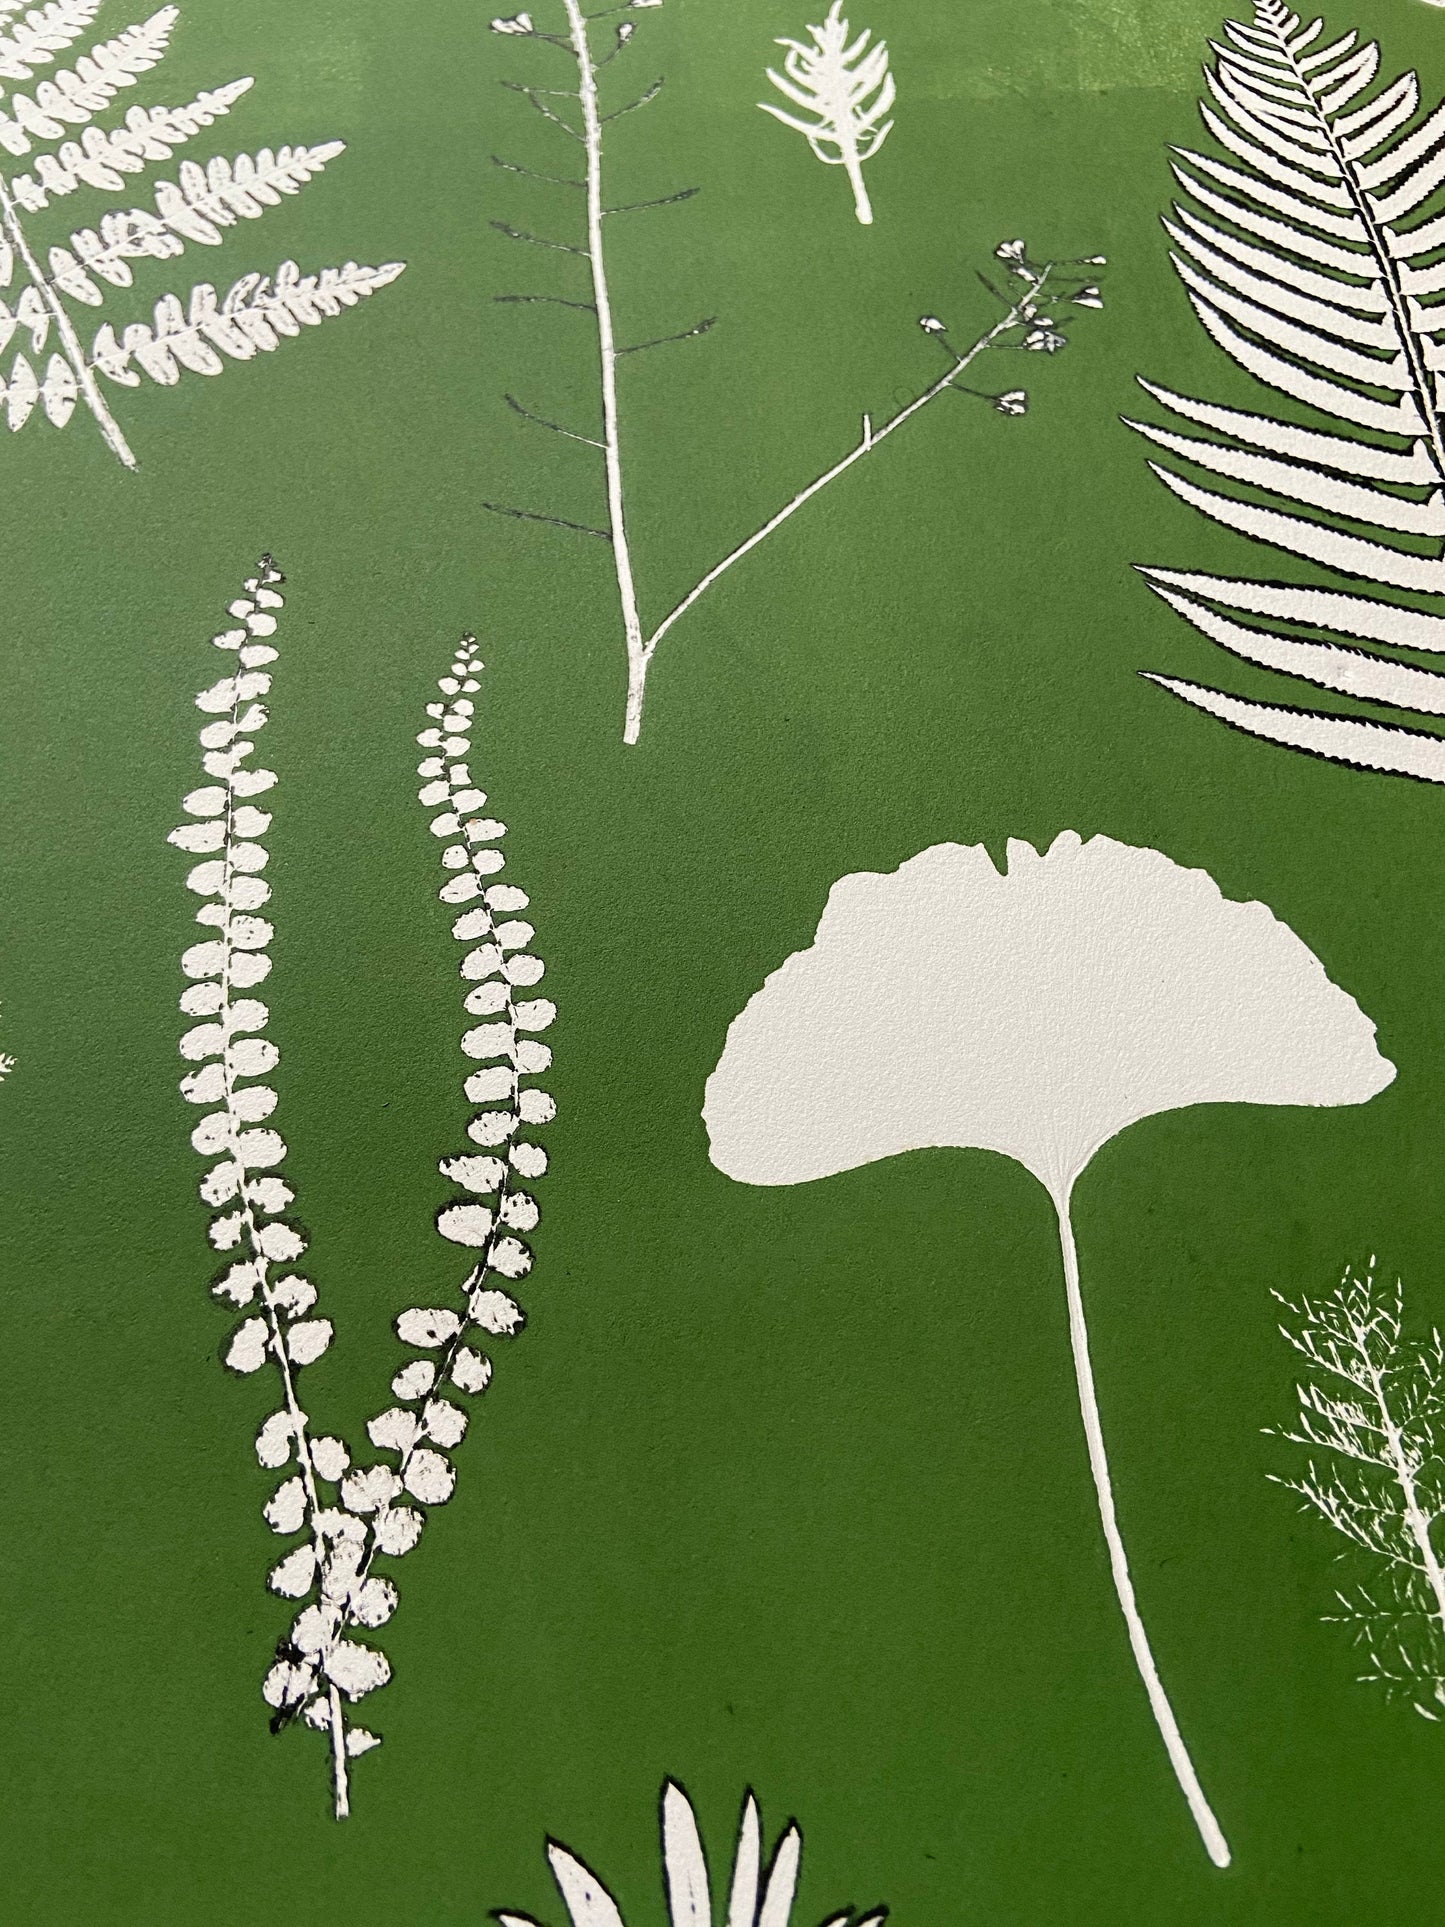 Fern Collage Hand Pressed Botanical Monoprint on Green - giclee print